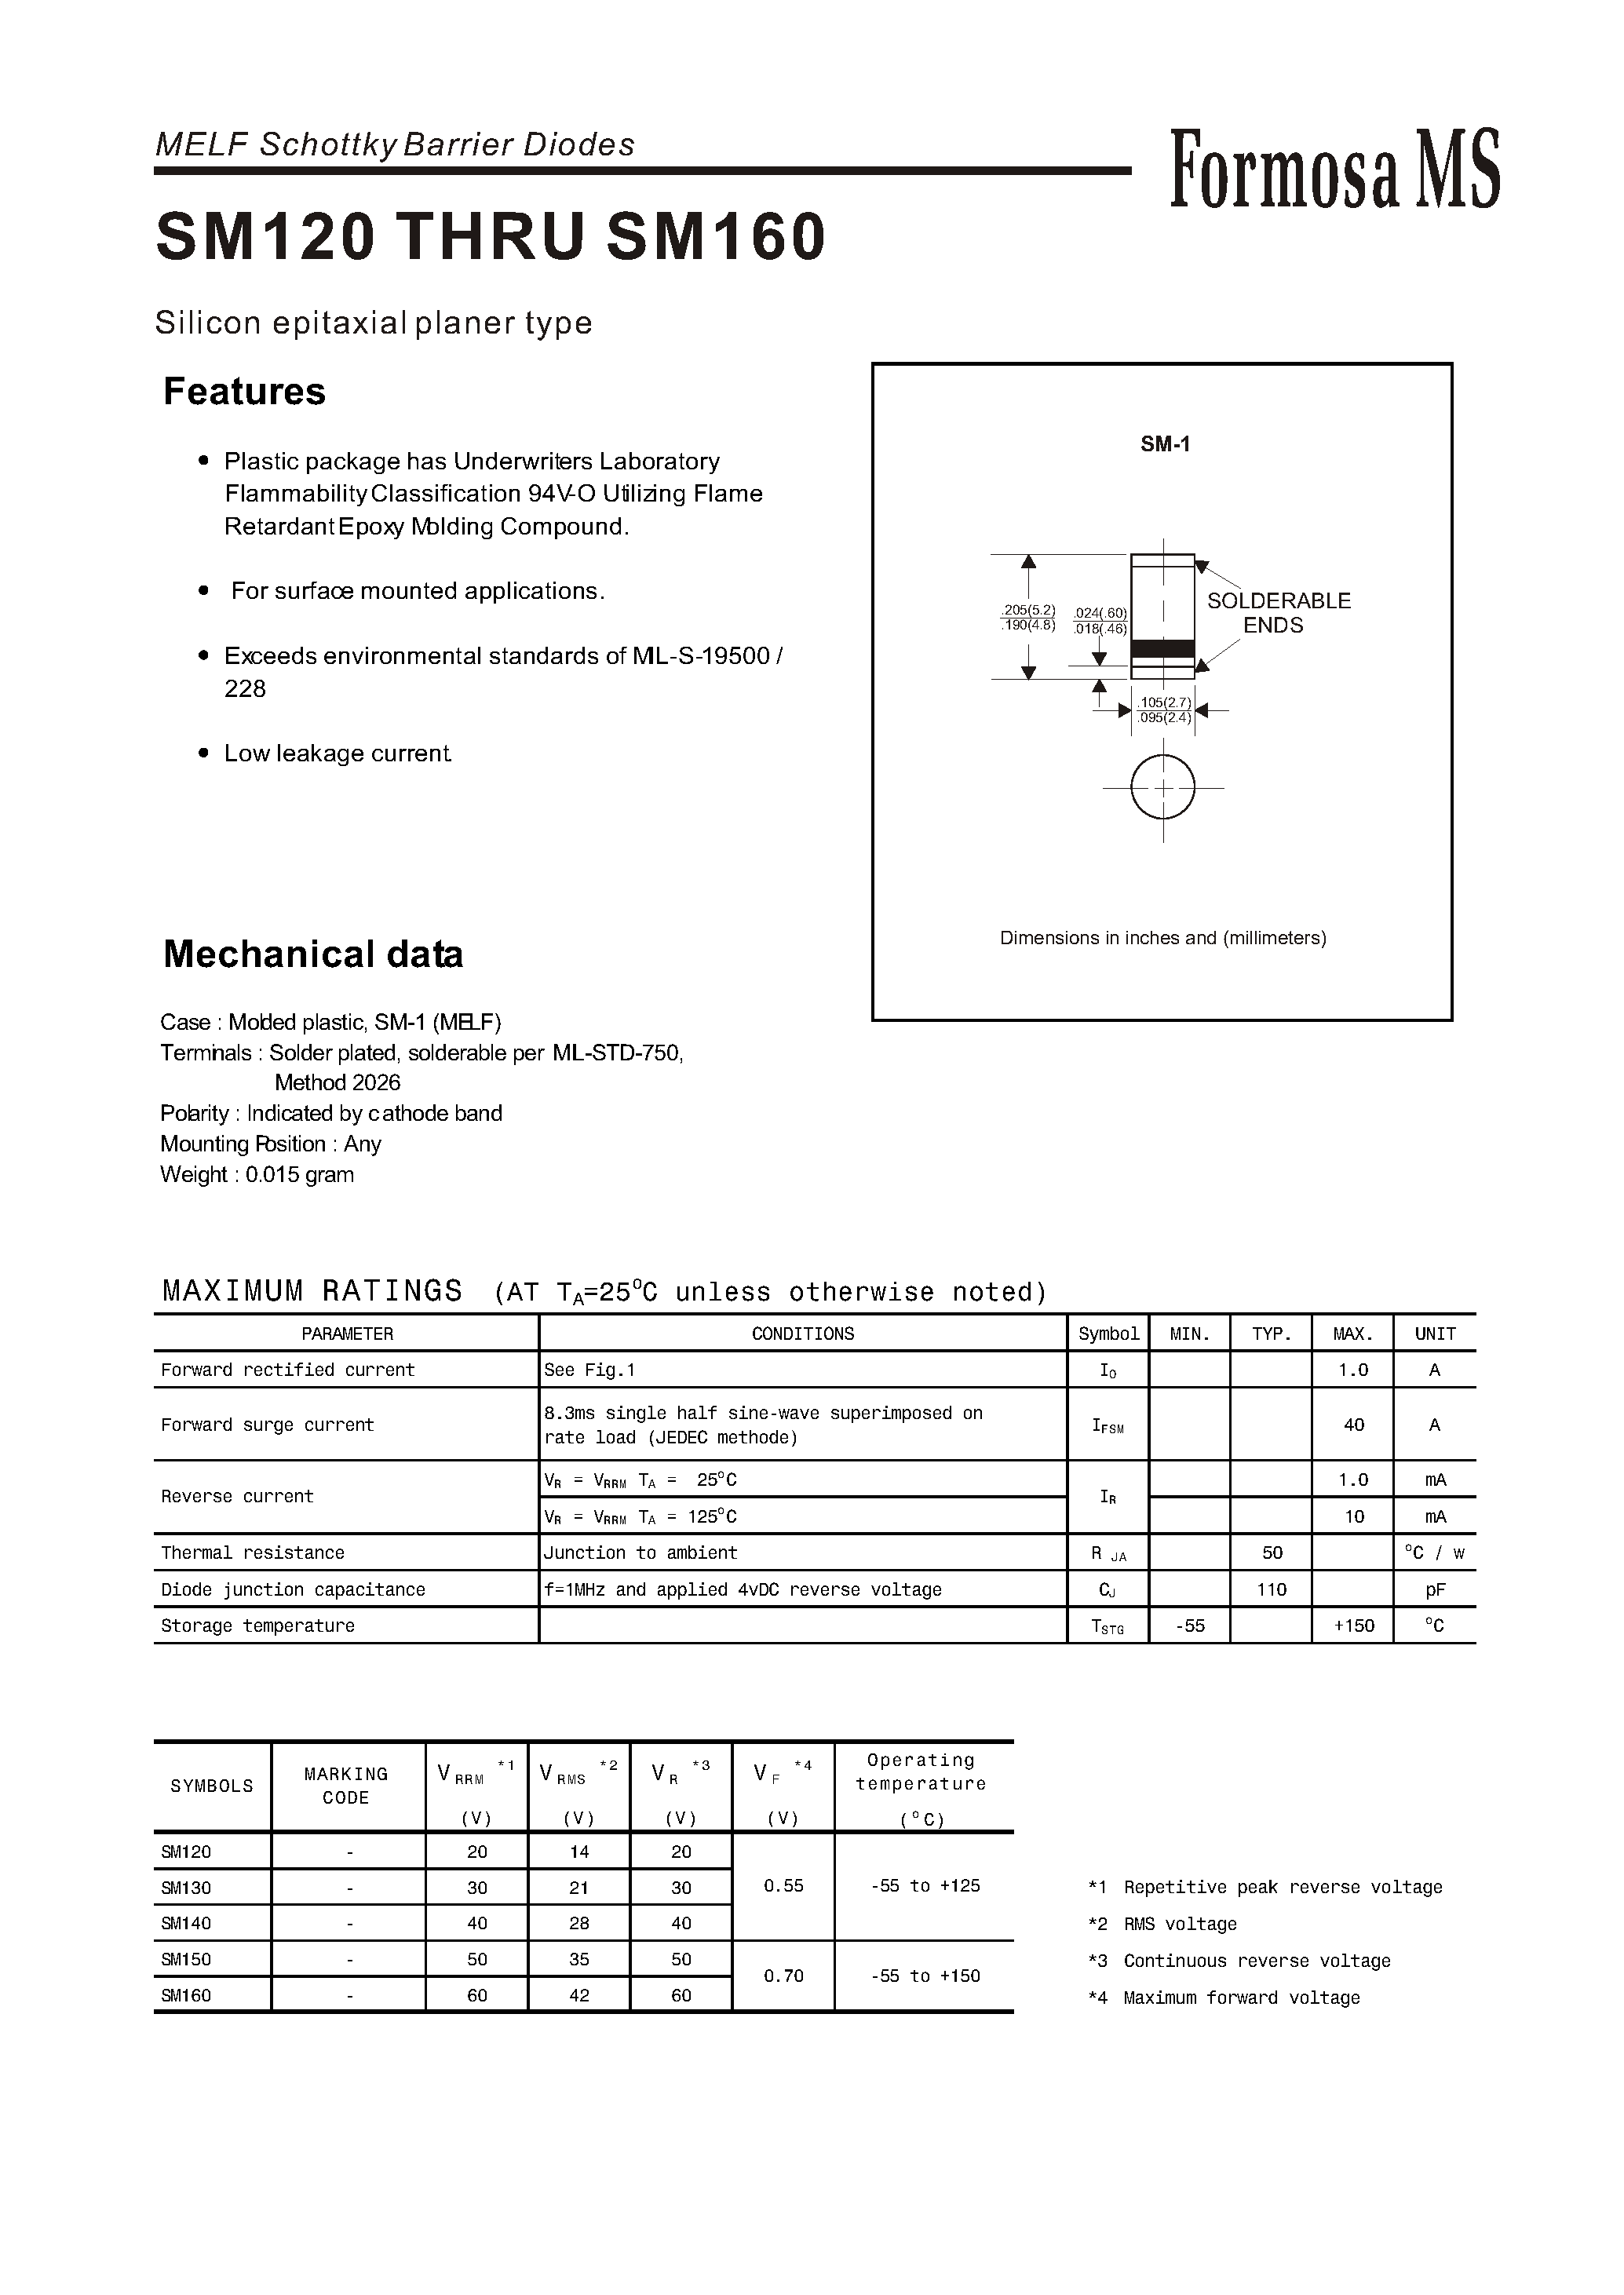 Datasheet SM130 - Silicon epitaxial planer type page 1